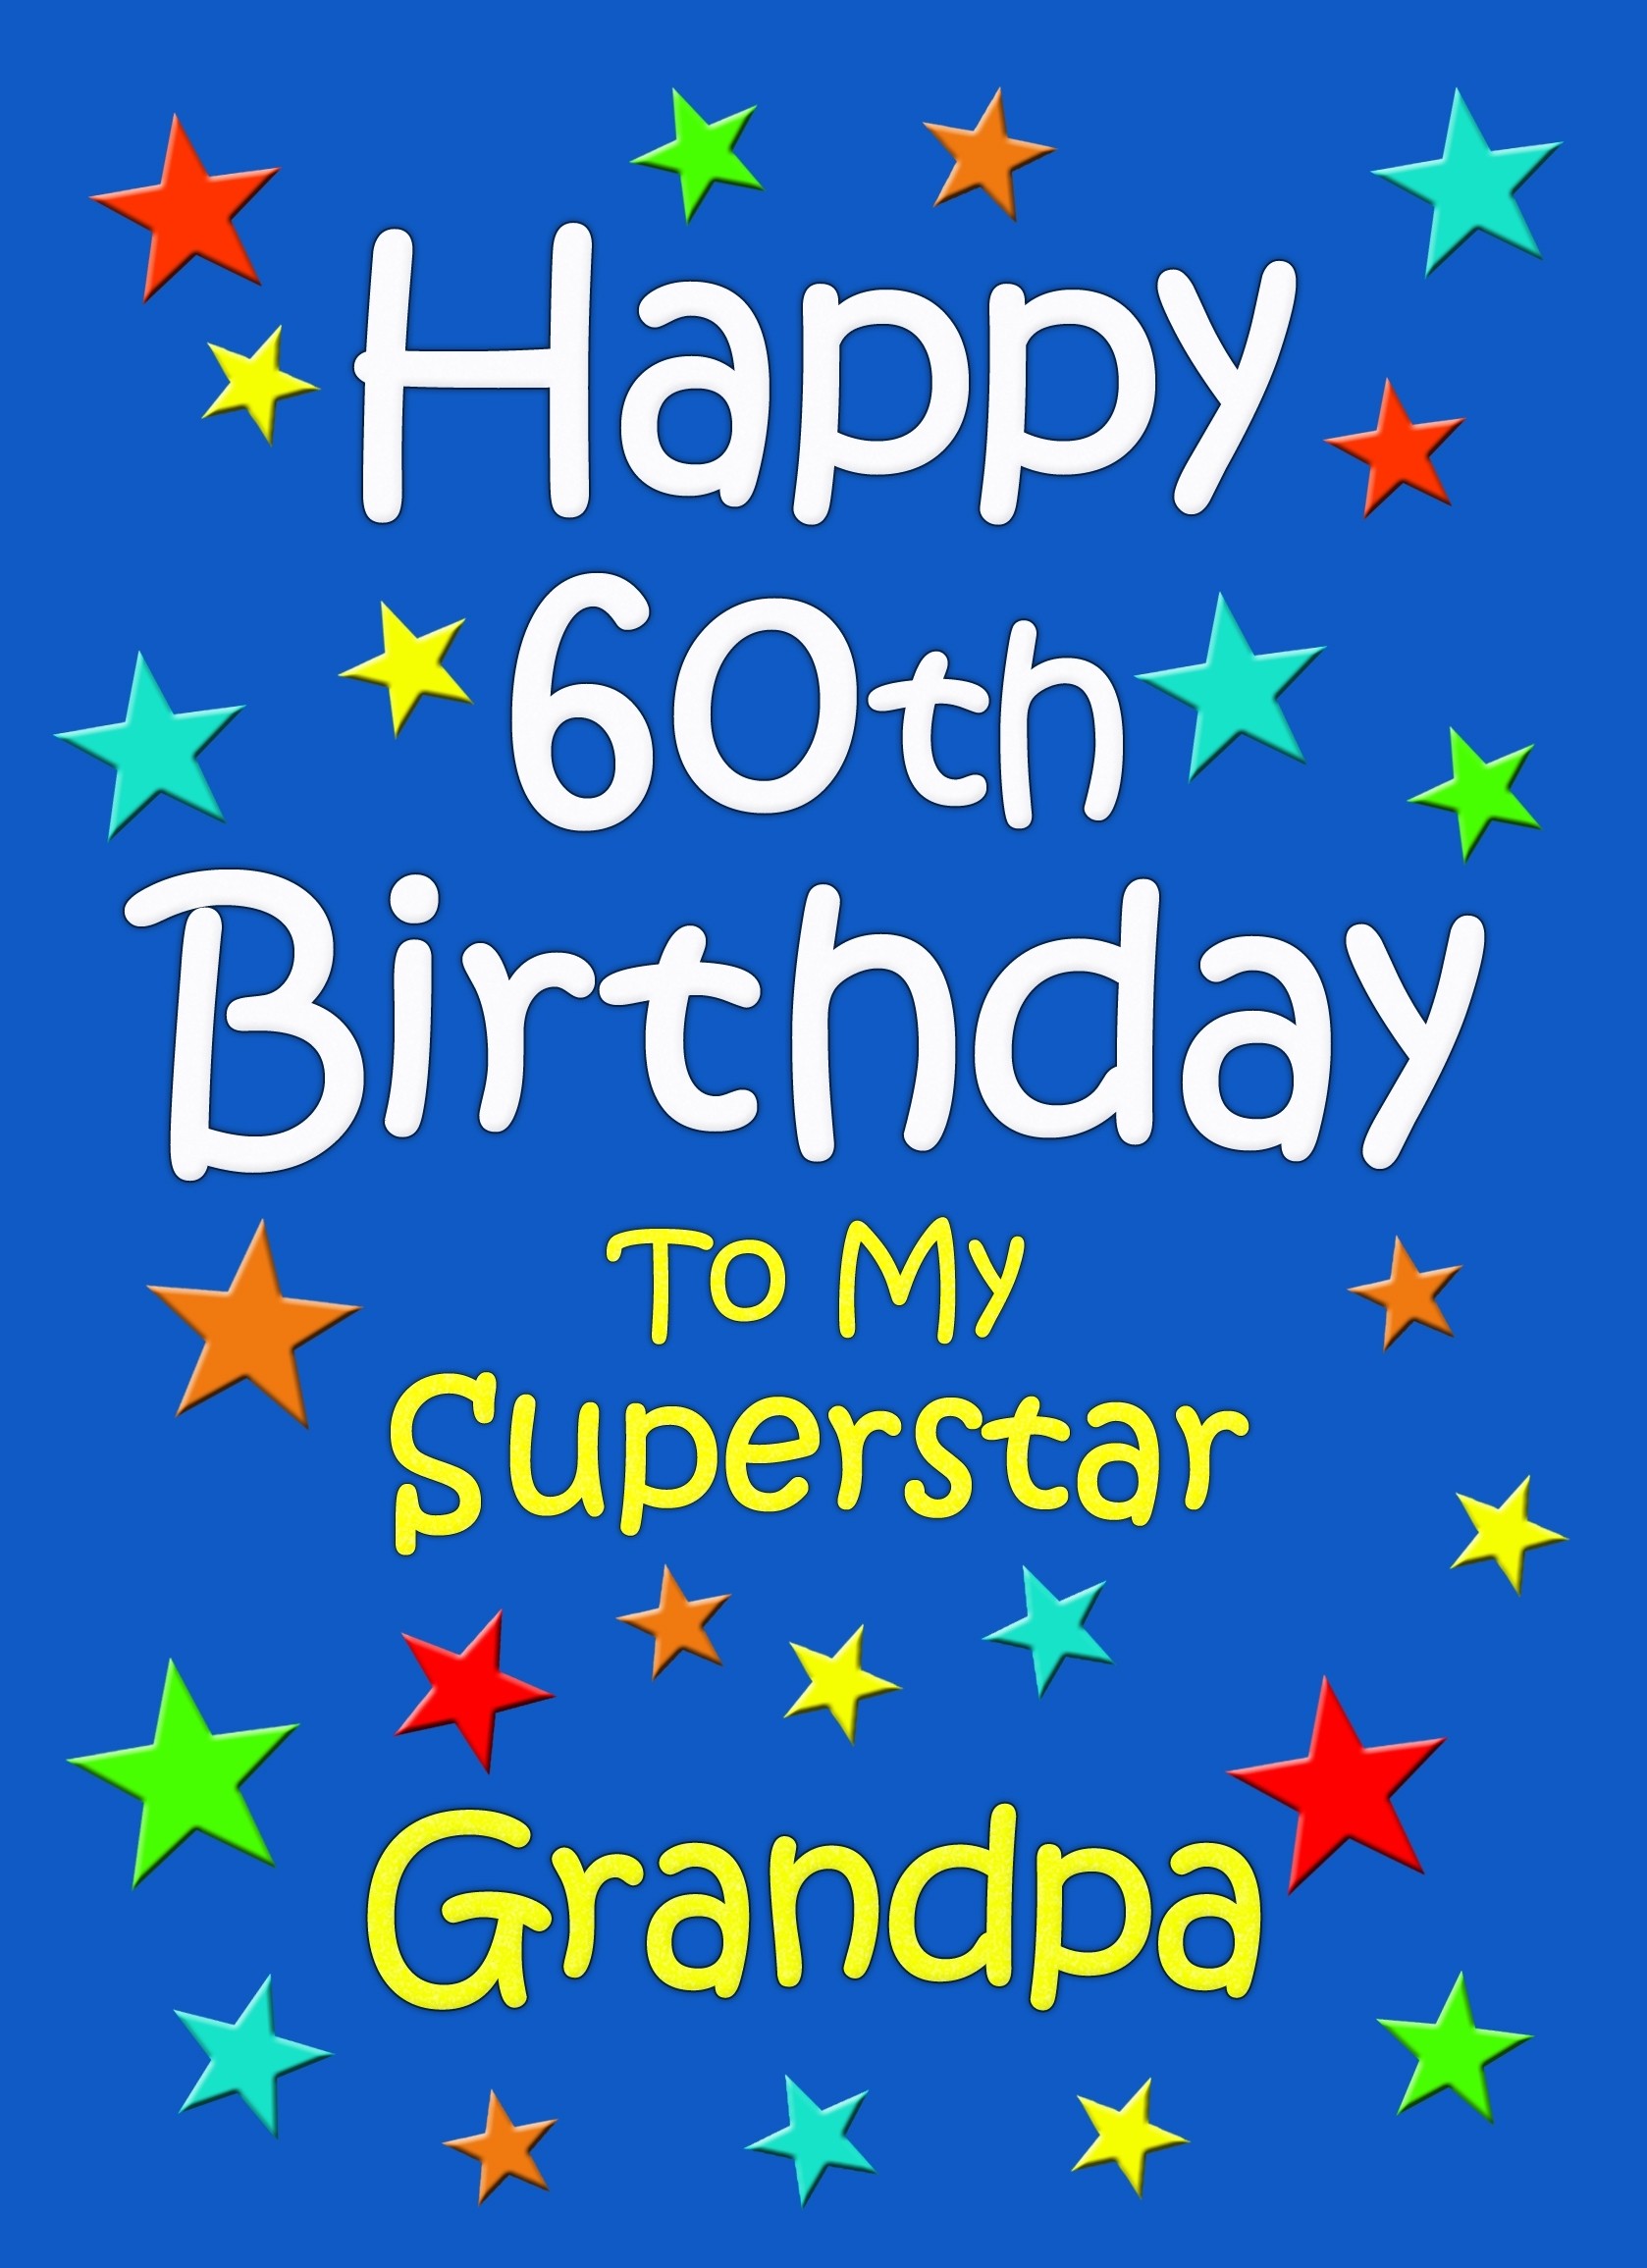 Grandpa 60th Birthday Card (Blue)